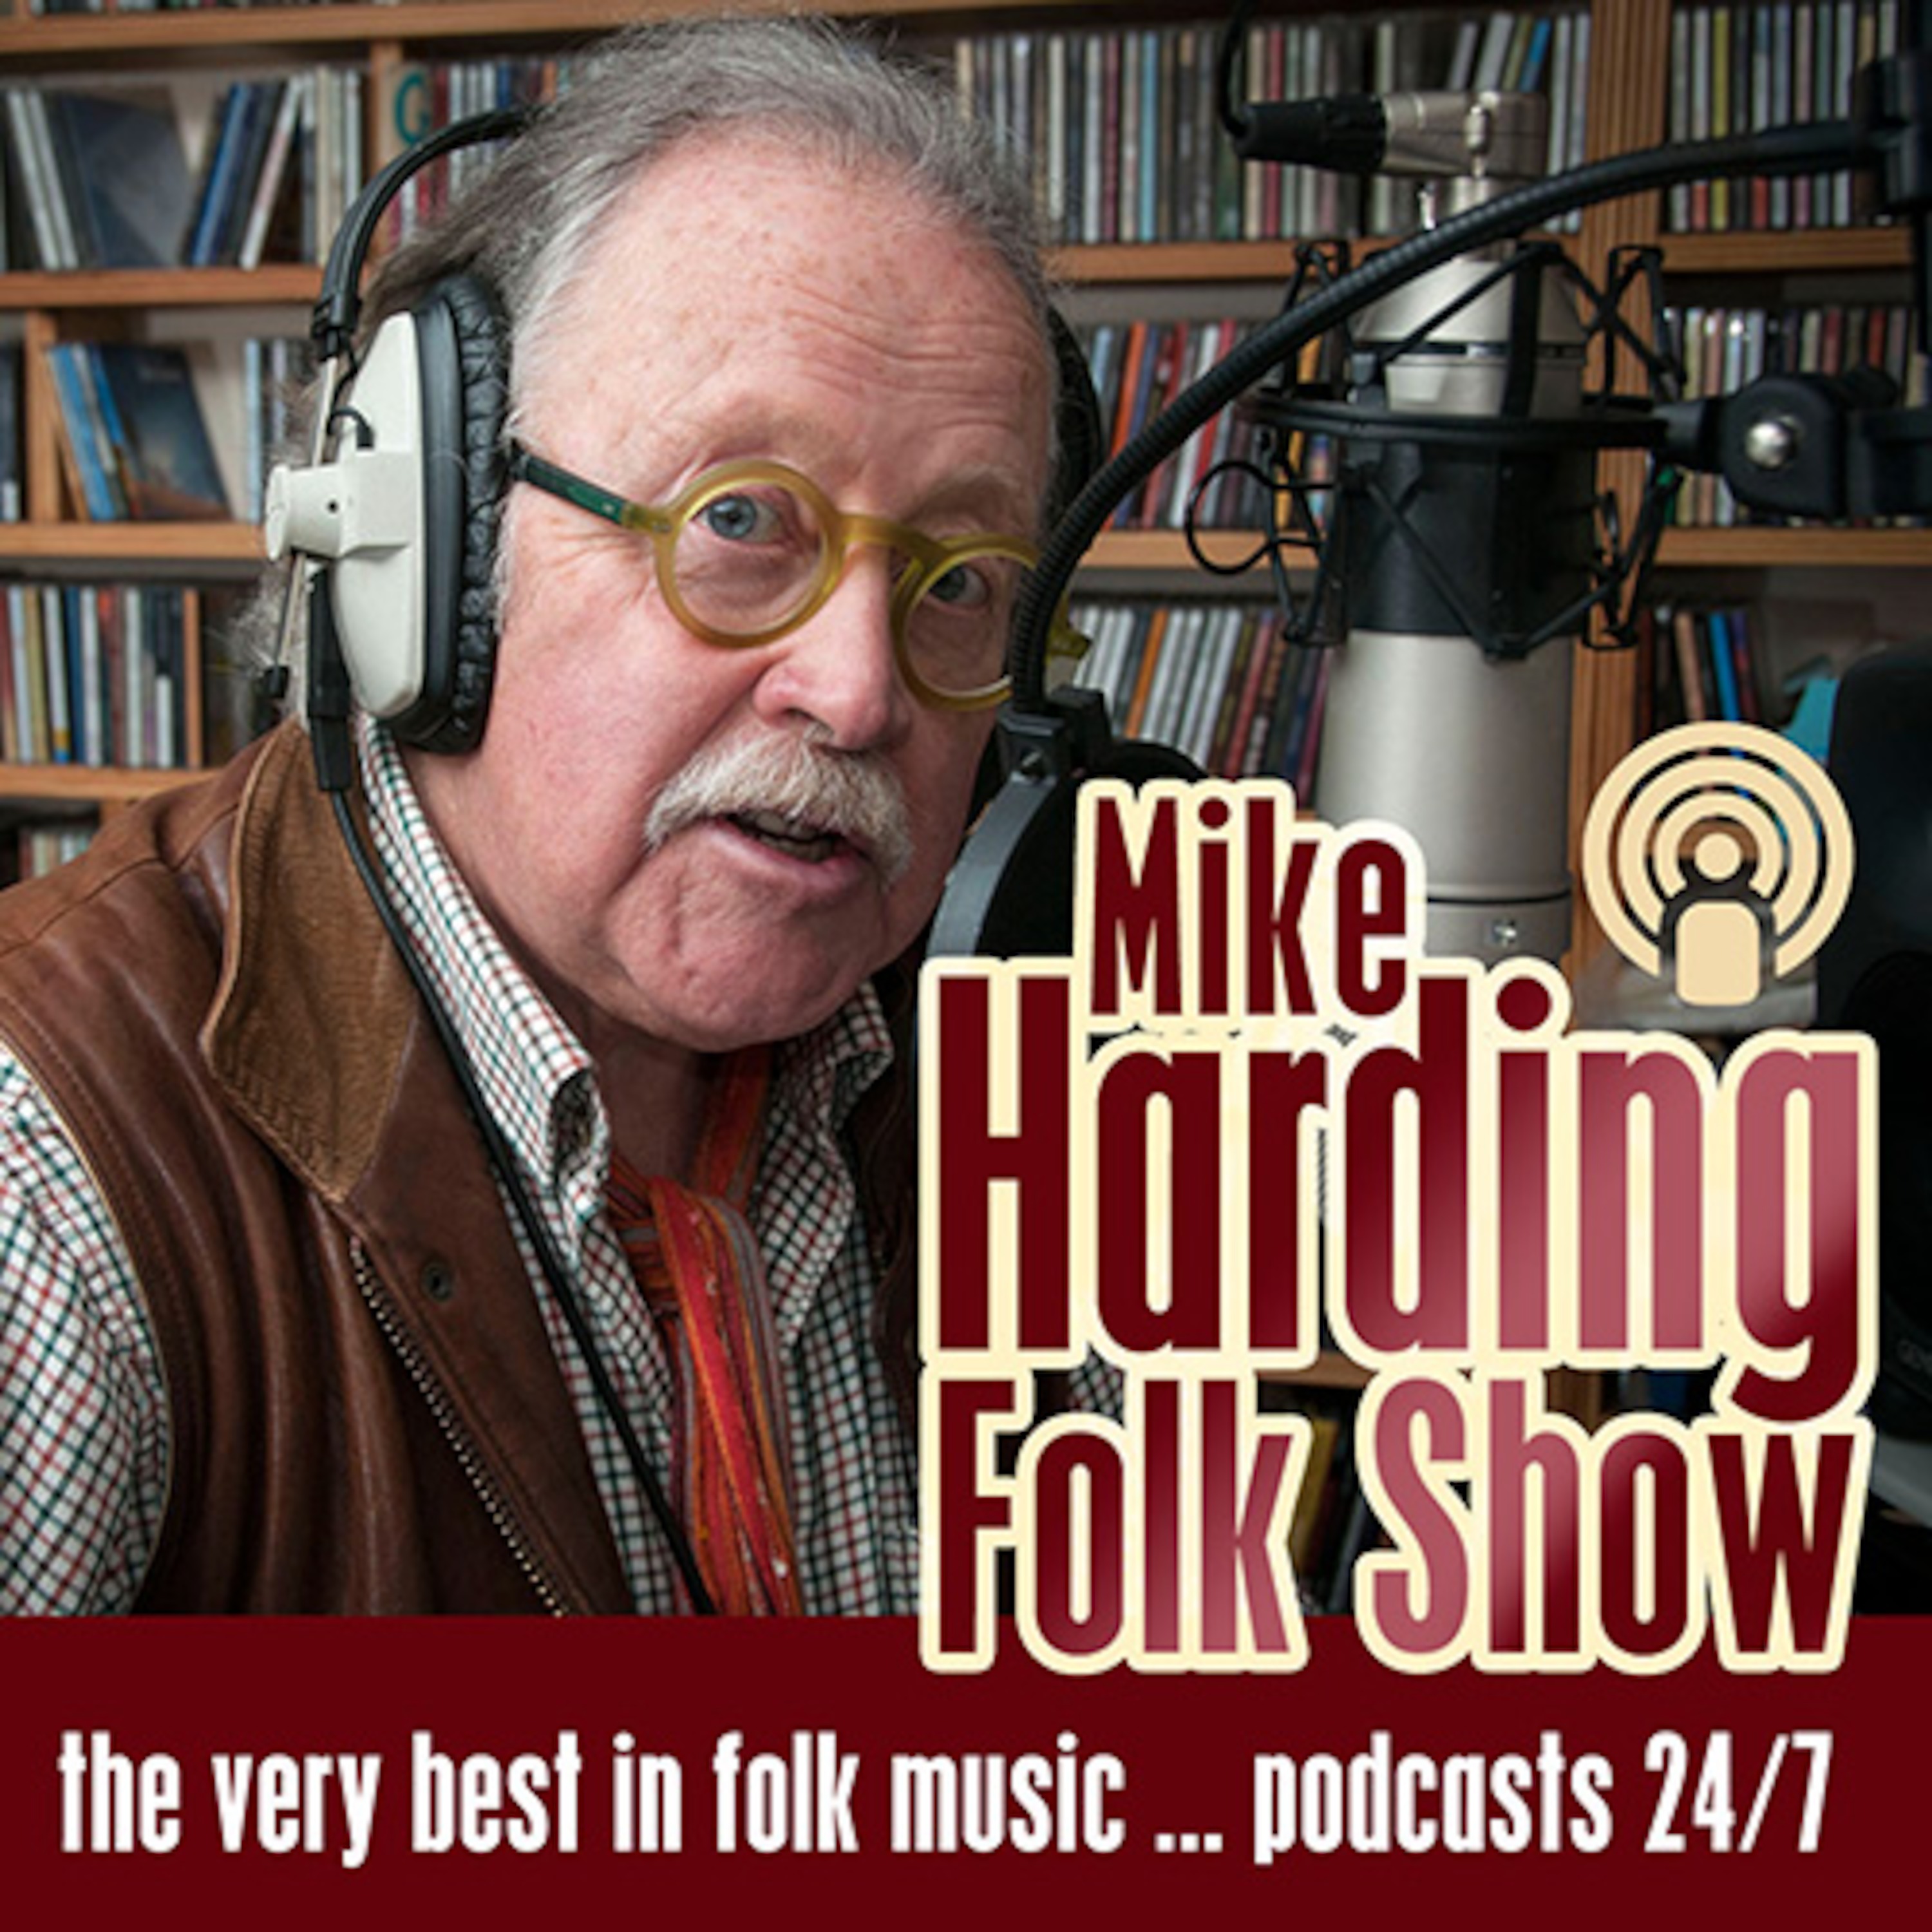 Mike Harding Folk Show 151